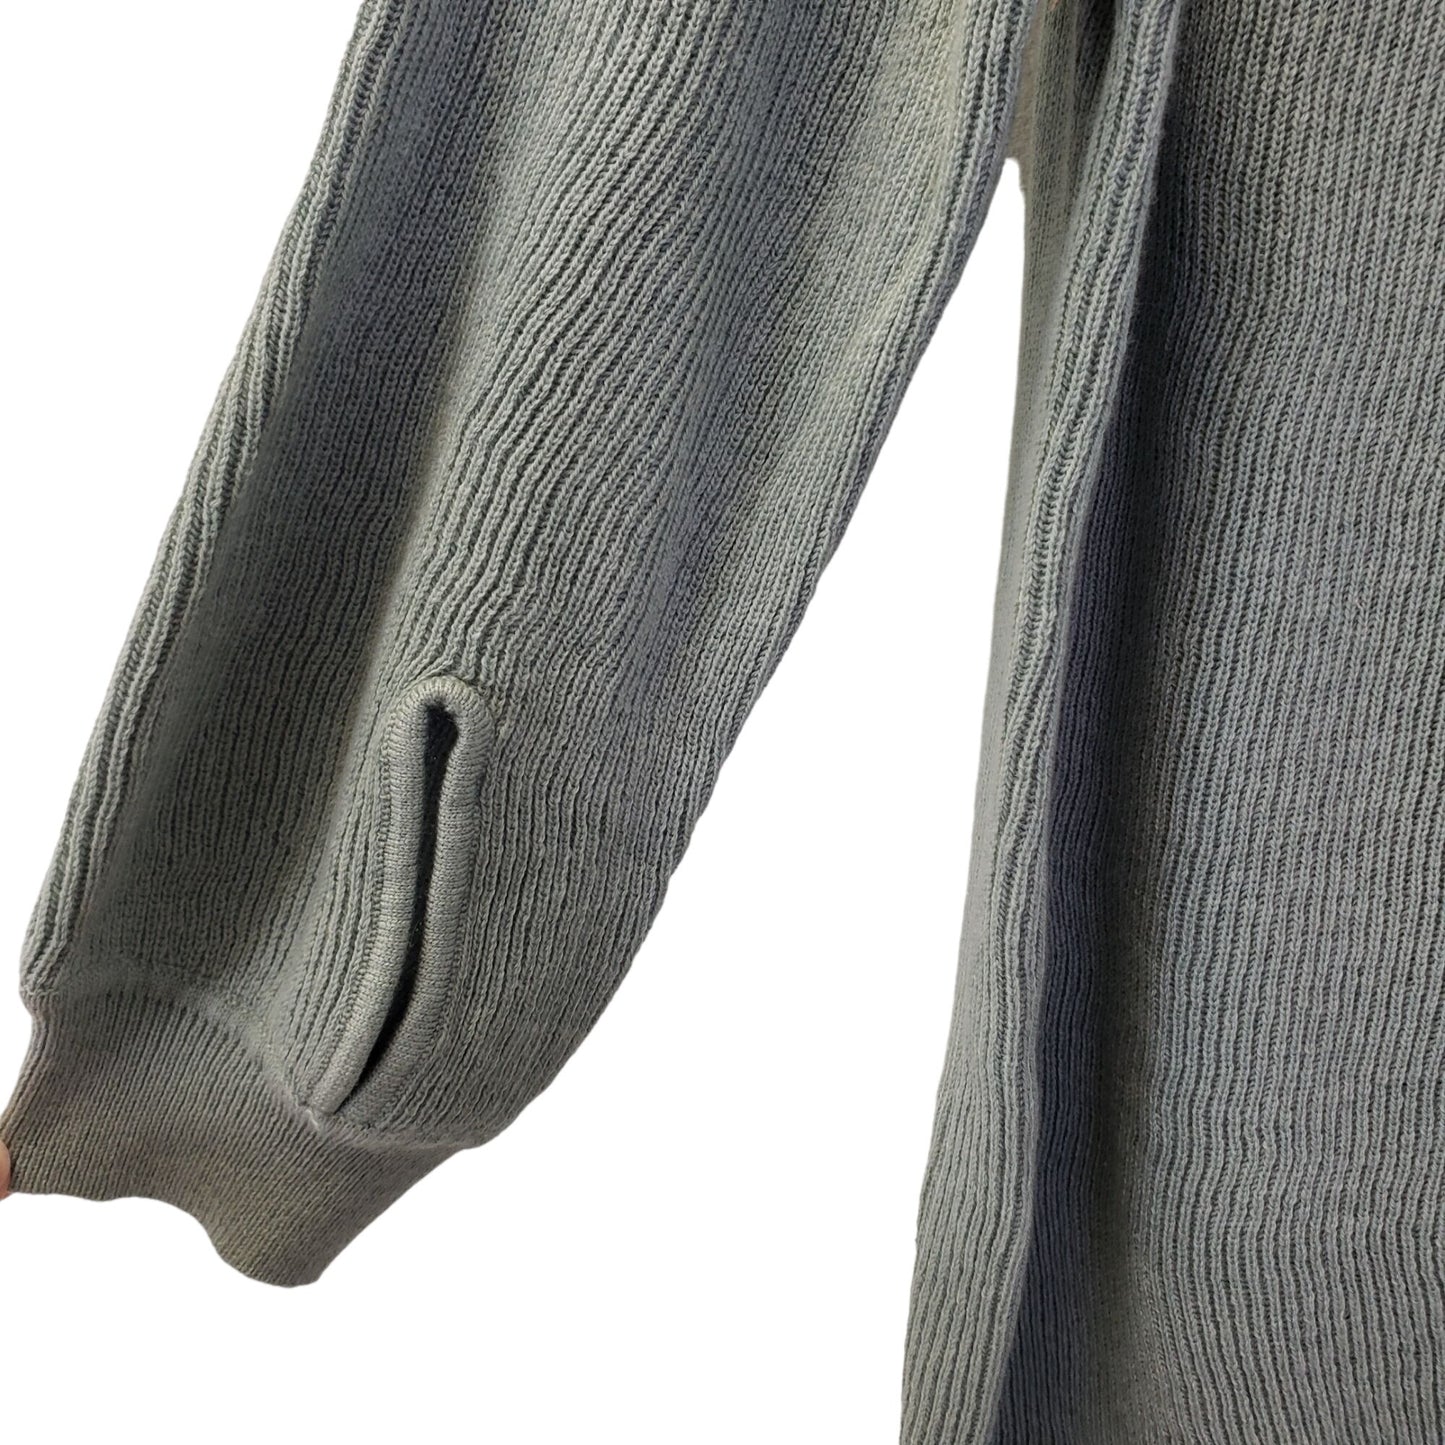 NWT JTFSANA Wool Blend Flexible Tie Turtleneck Sweater Size Small